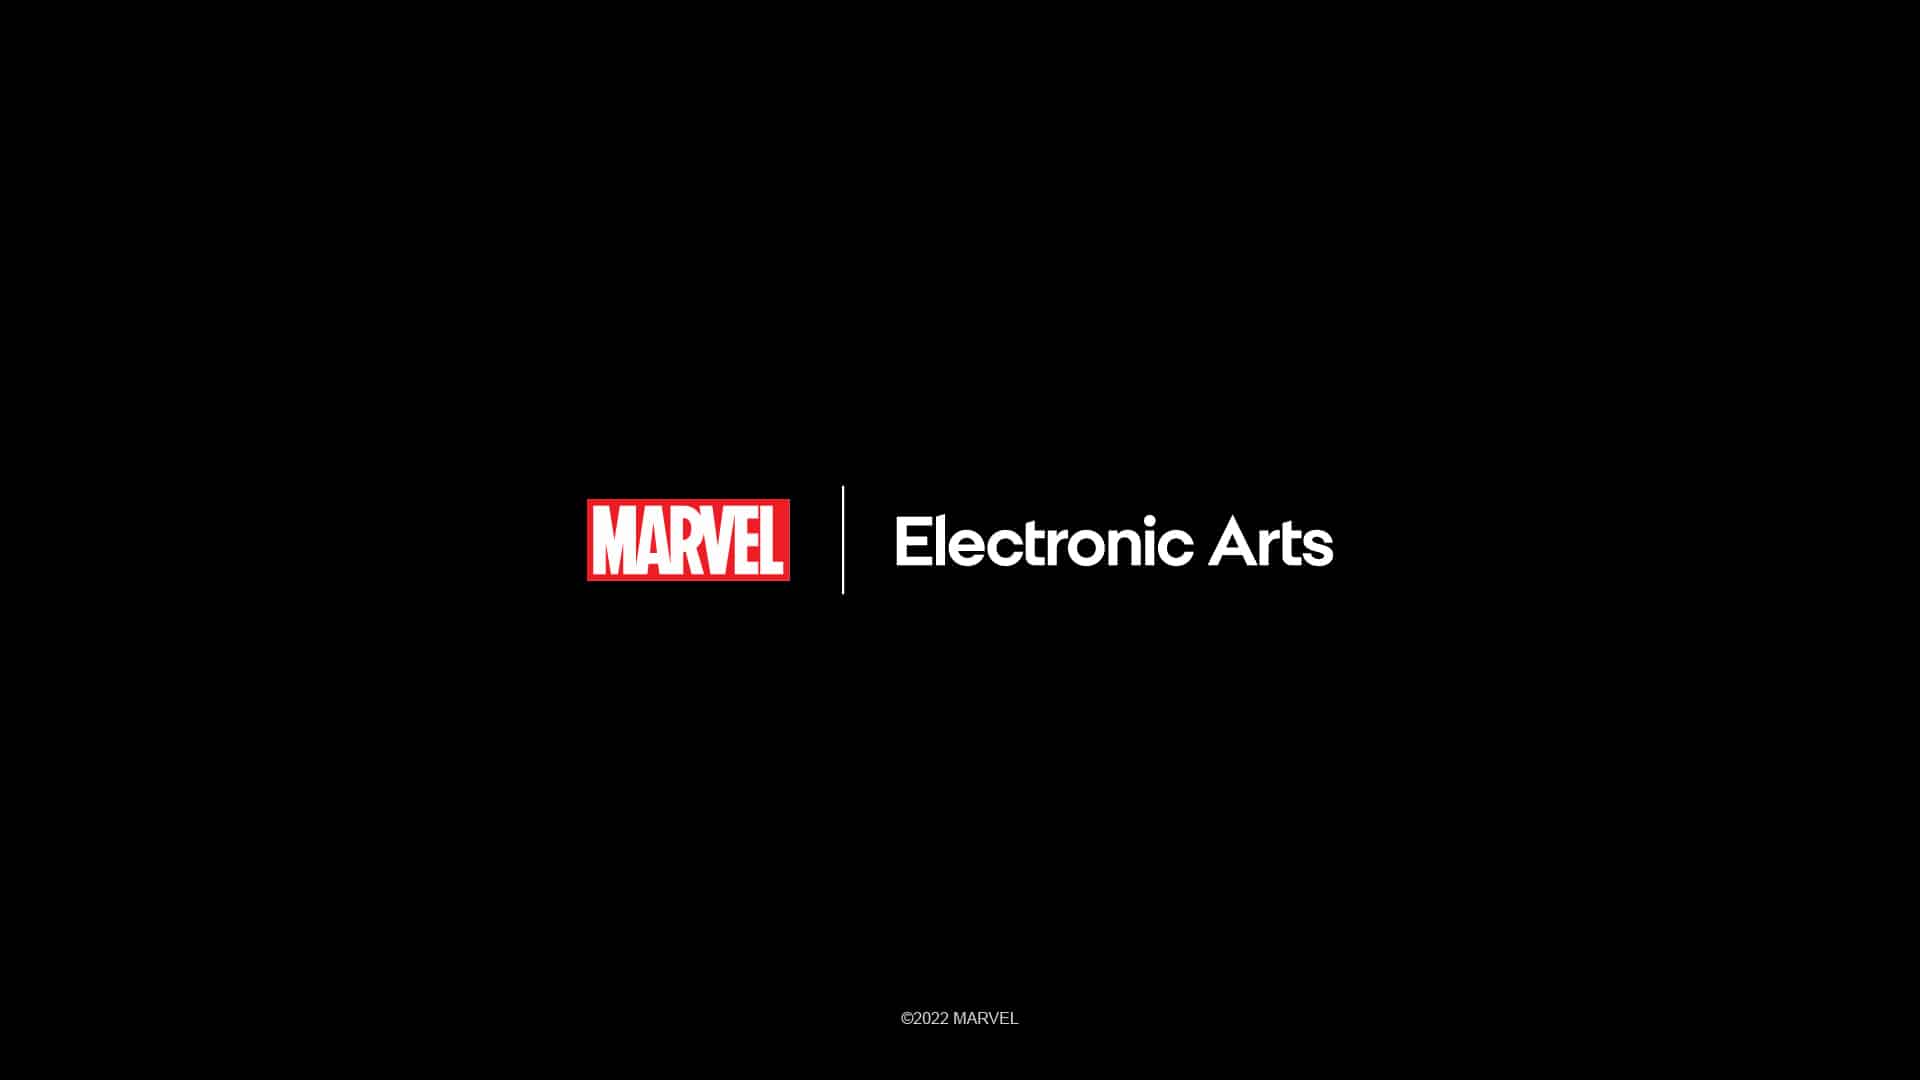 Electronic Arts annonce sa collaboration avec Marvel